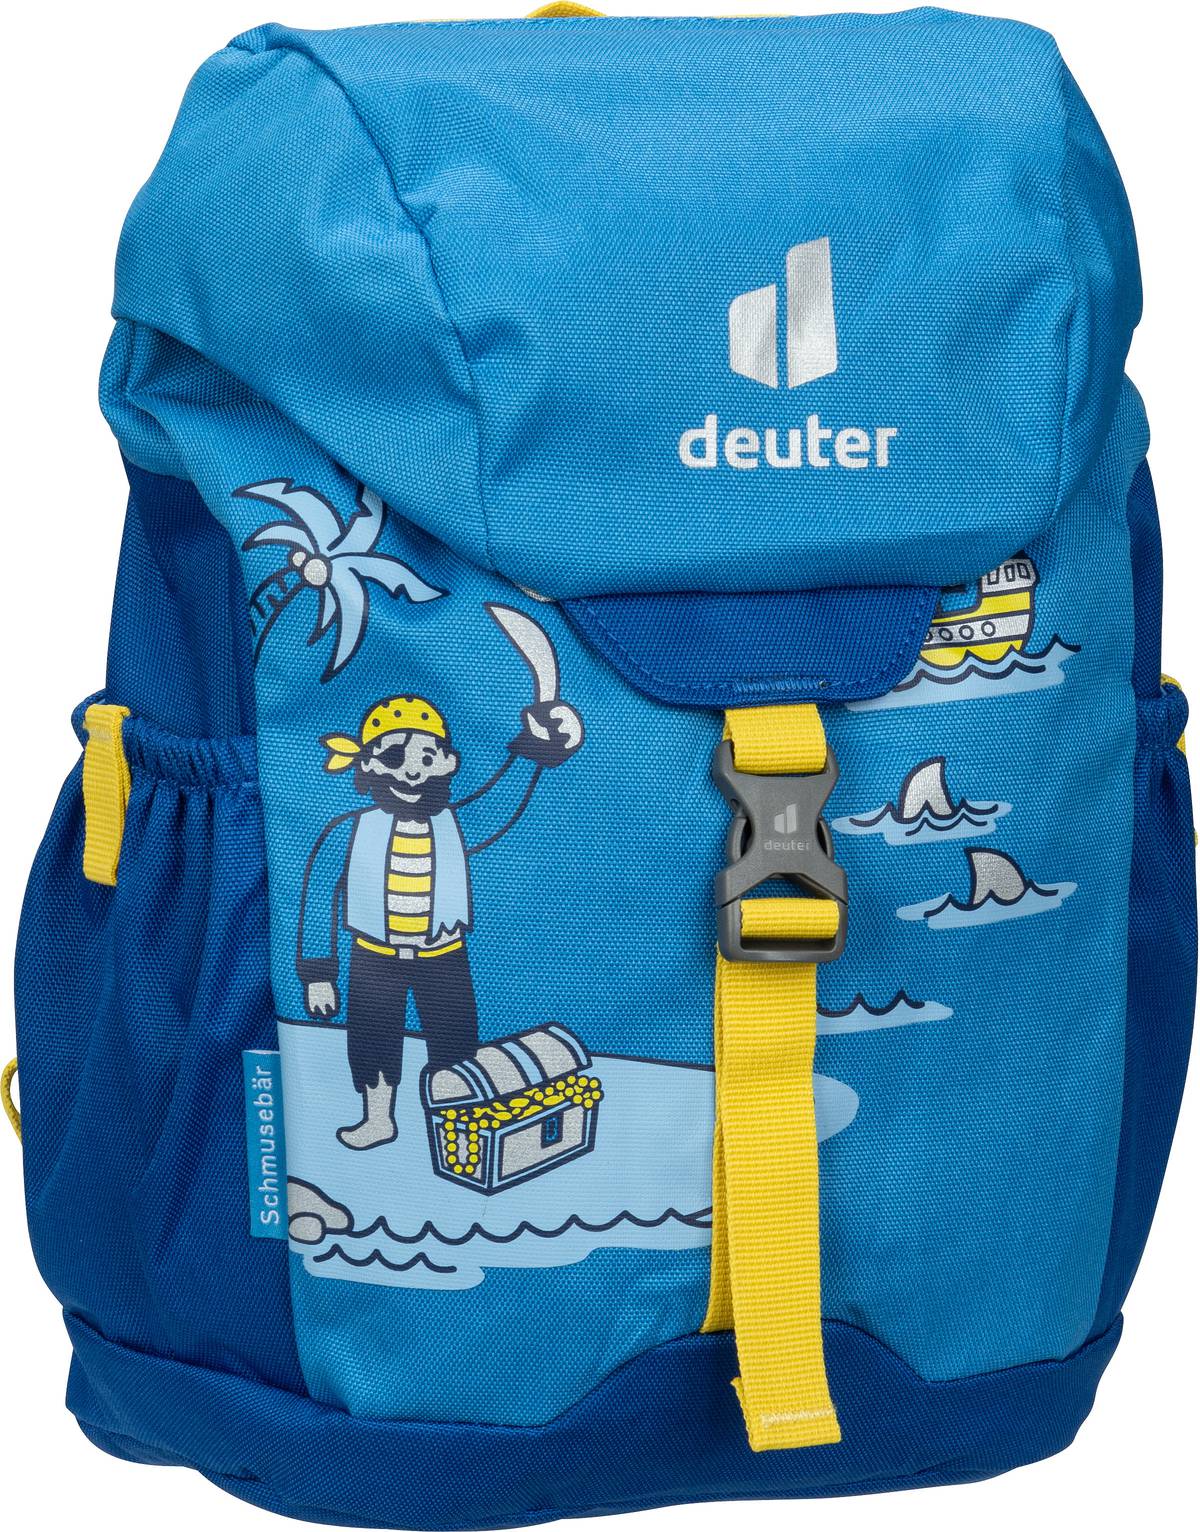 Deuter Deuter Schmusebär in Blau (8 Liter), Rucksack / Backpack